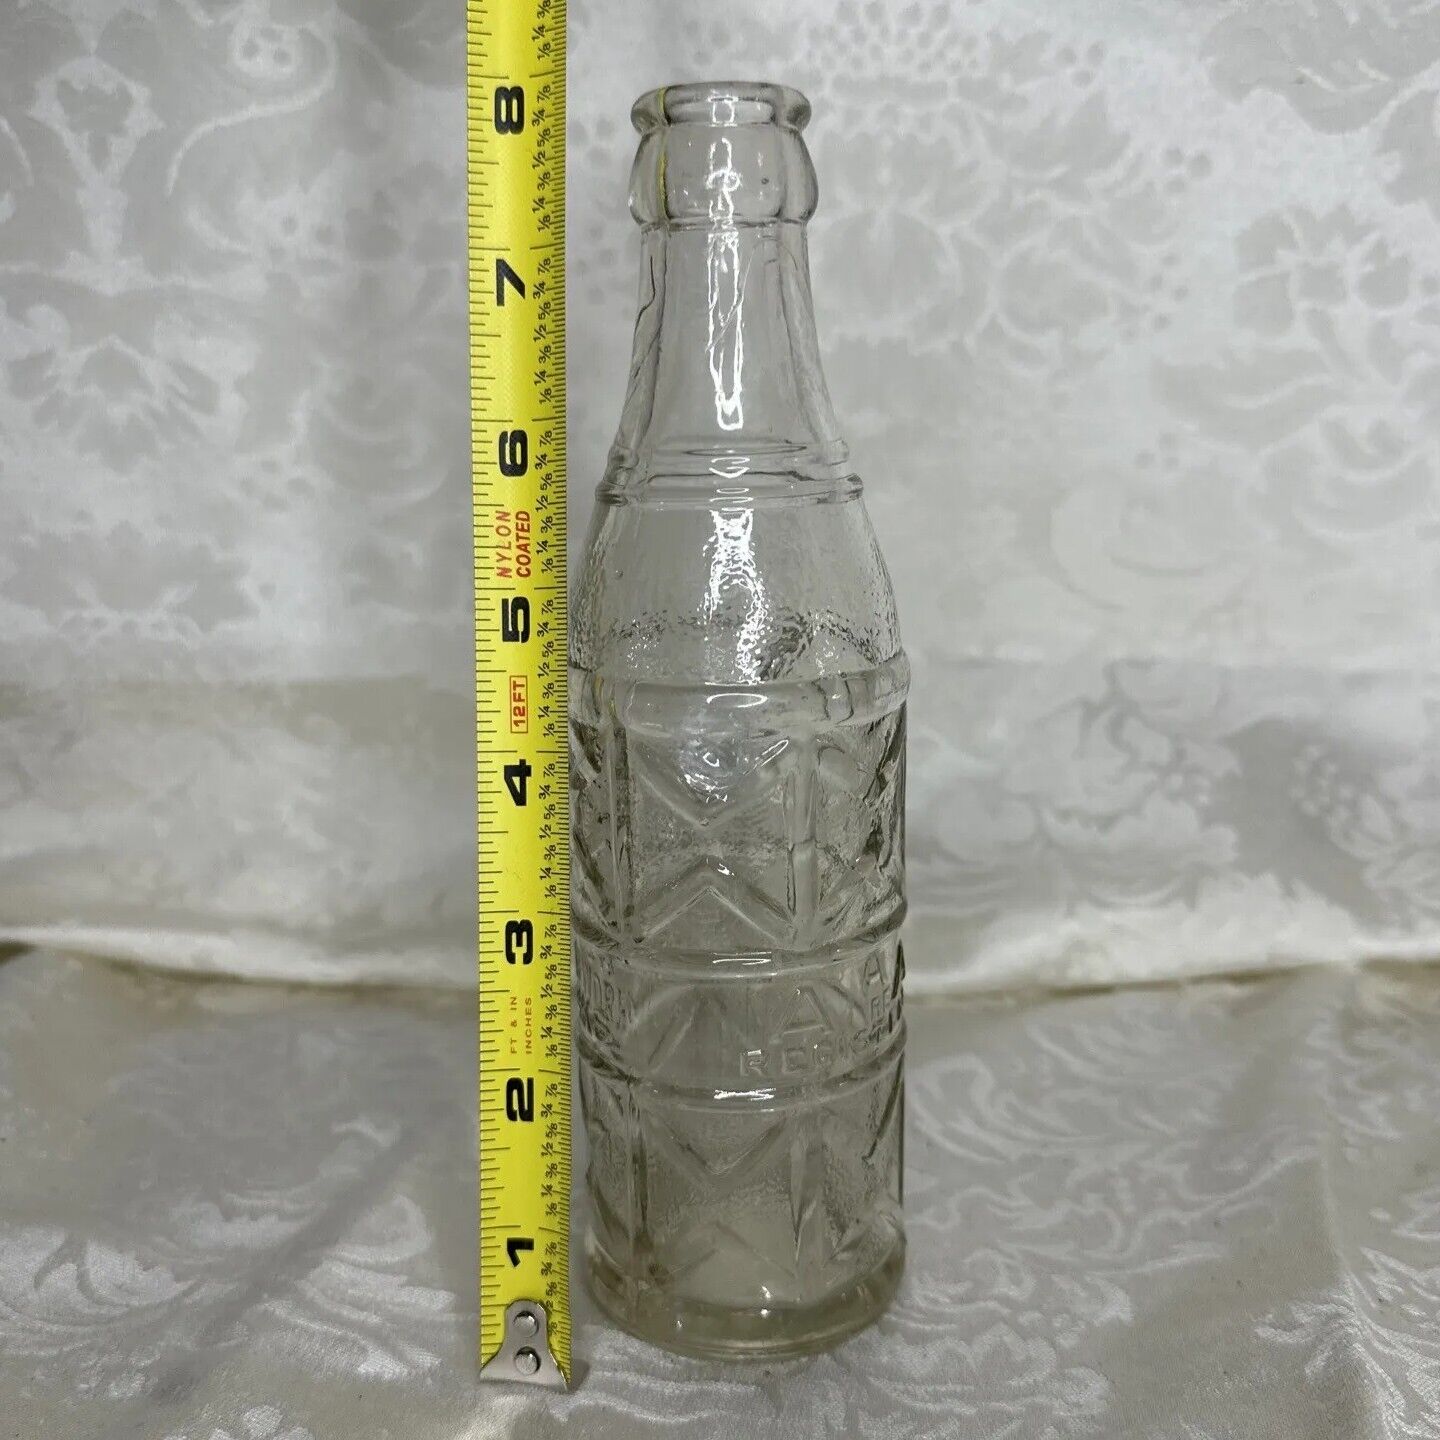  WHARTON GLASS SODA BOTTLE A A Registered Vintage RARE  Embossed Bottling Works